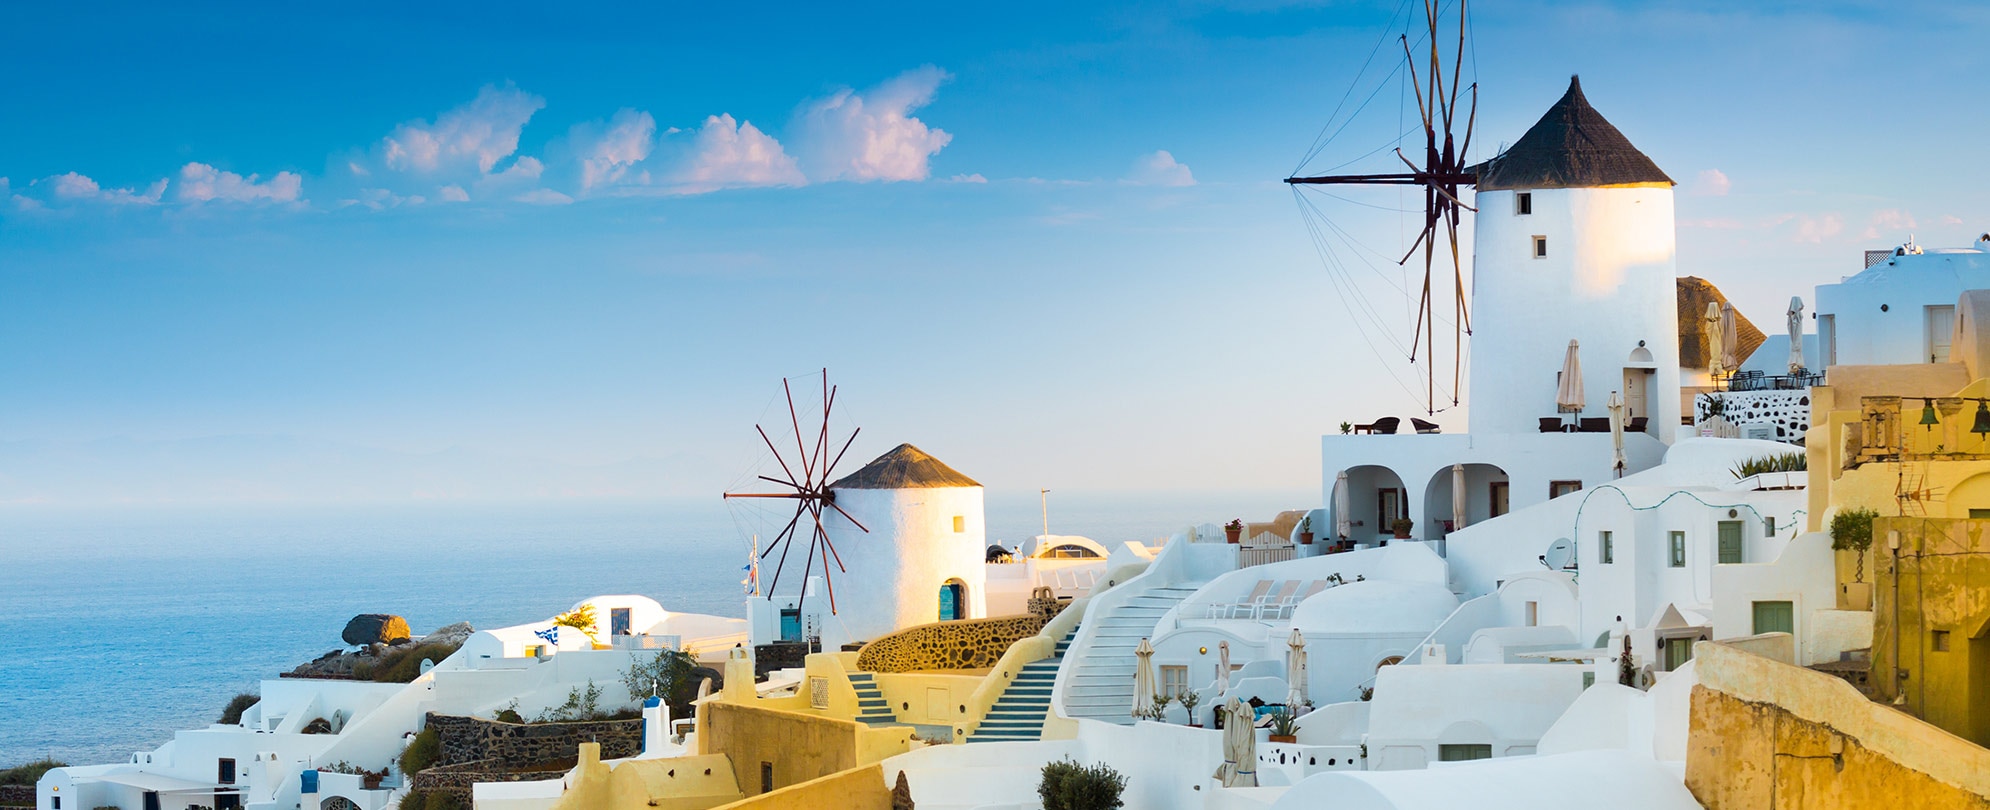 Fira, capital of Santorini, a Greek island in the Aegean Sea. 